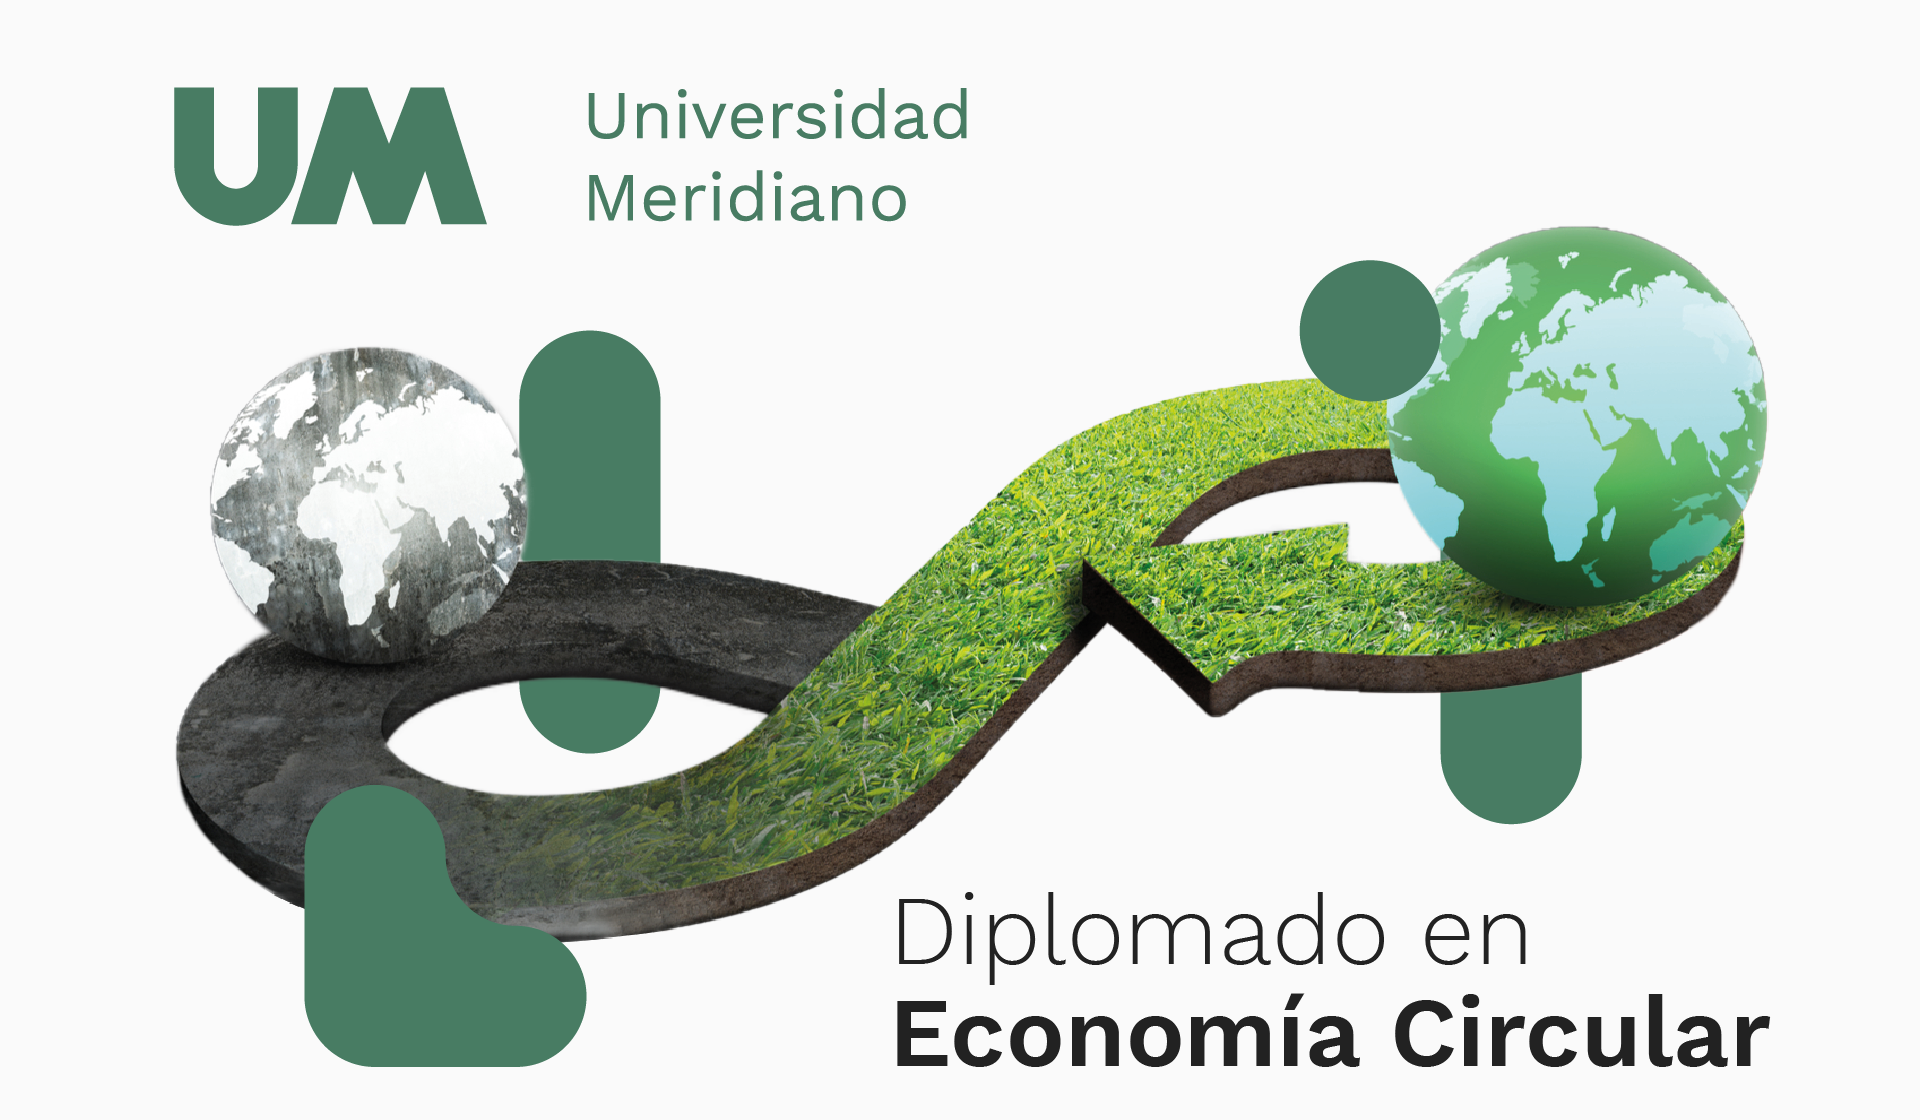 Universidad Meridiano